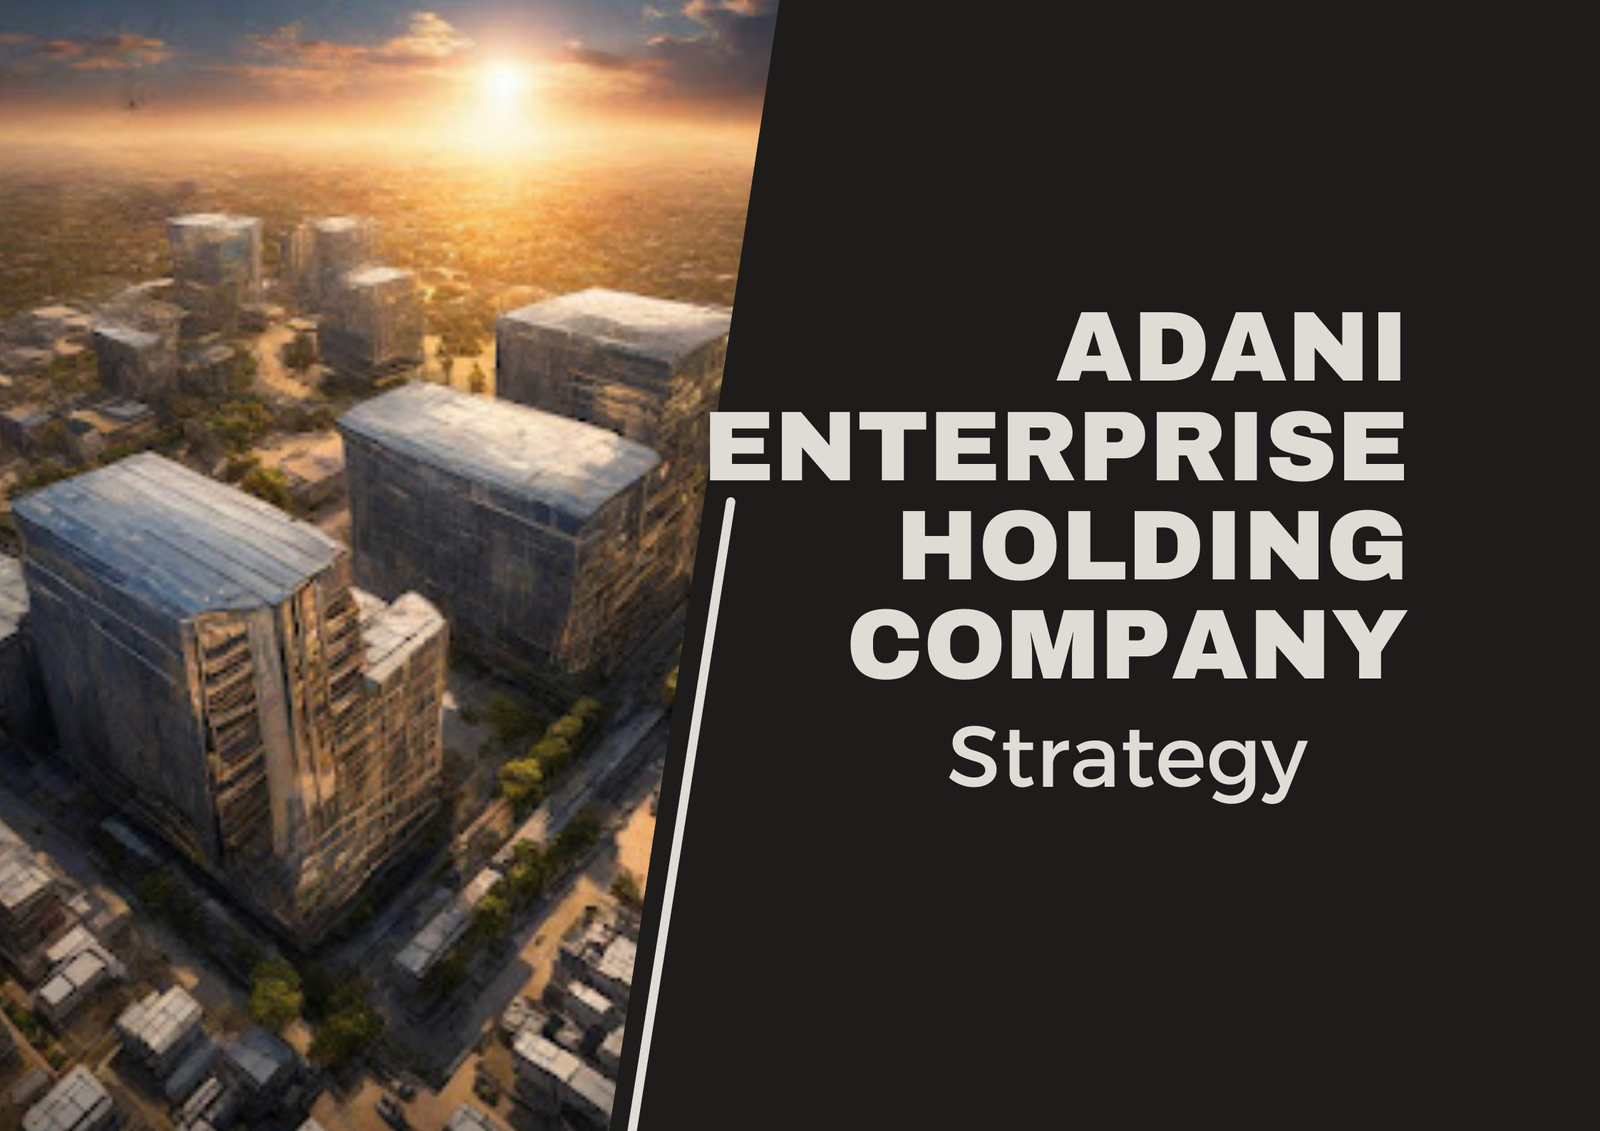 Adani Enterprise Holding Company